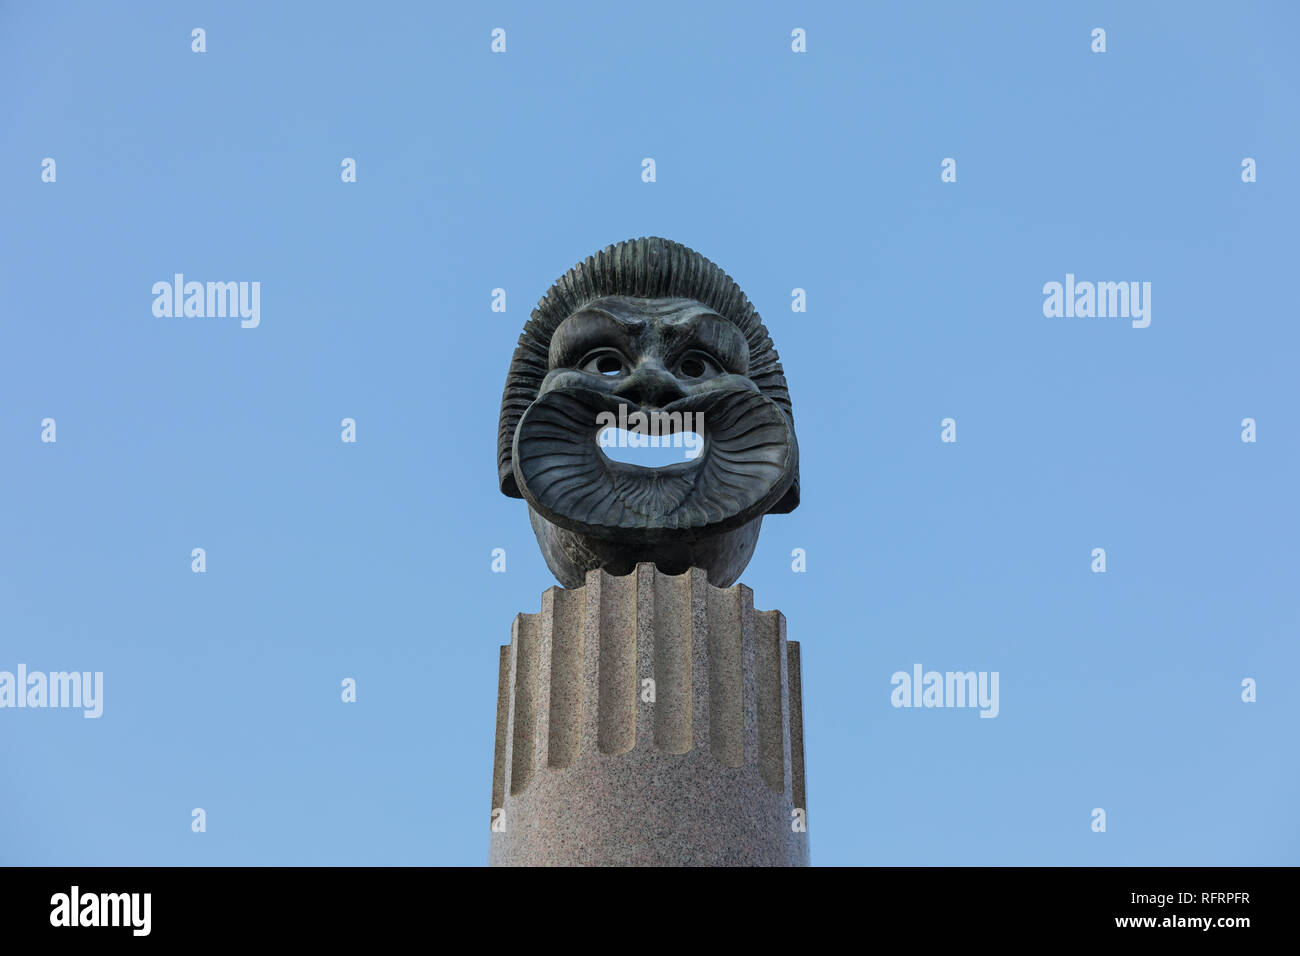 Comedy mask, part of the Adelaide Ristori monument - Cividale del Friuli, Italy Stock Photo